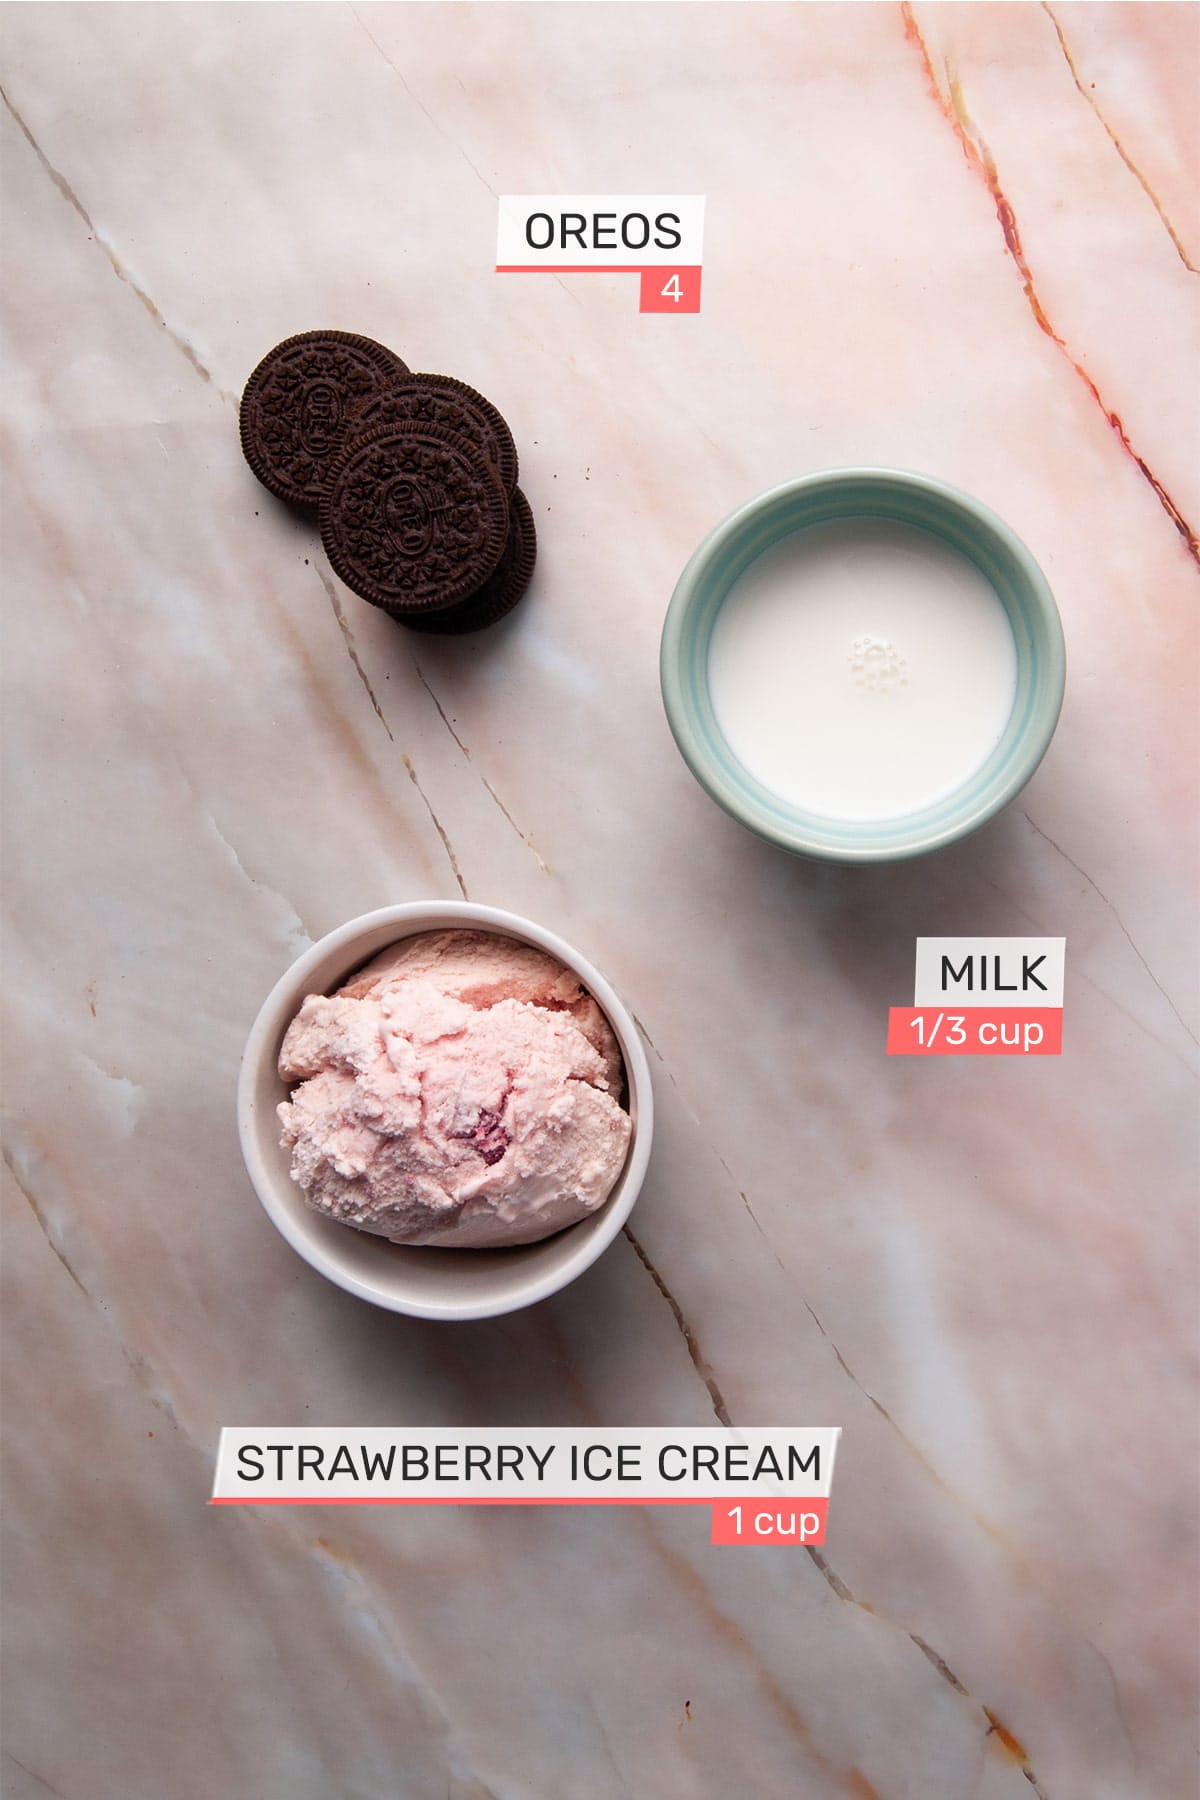 oreos, milk, and strawberry ice cream